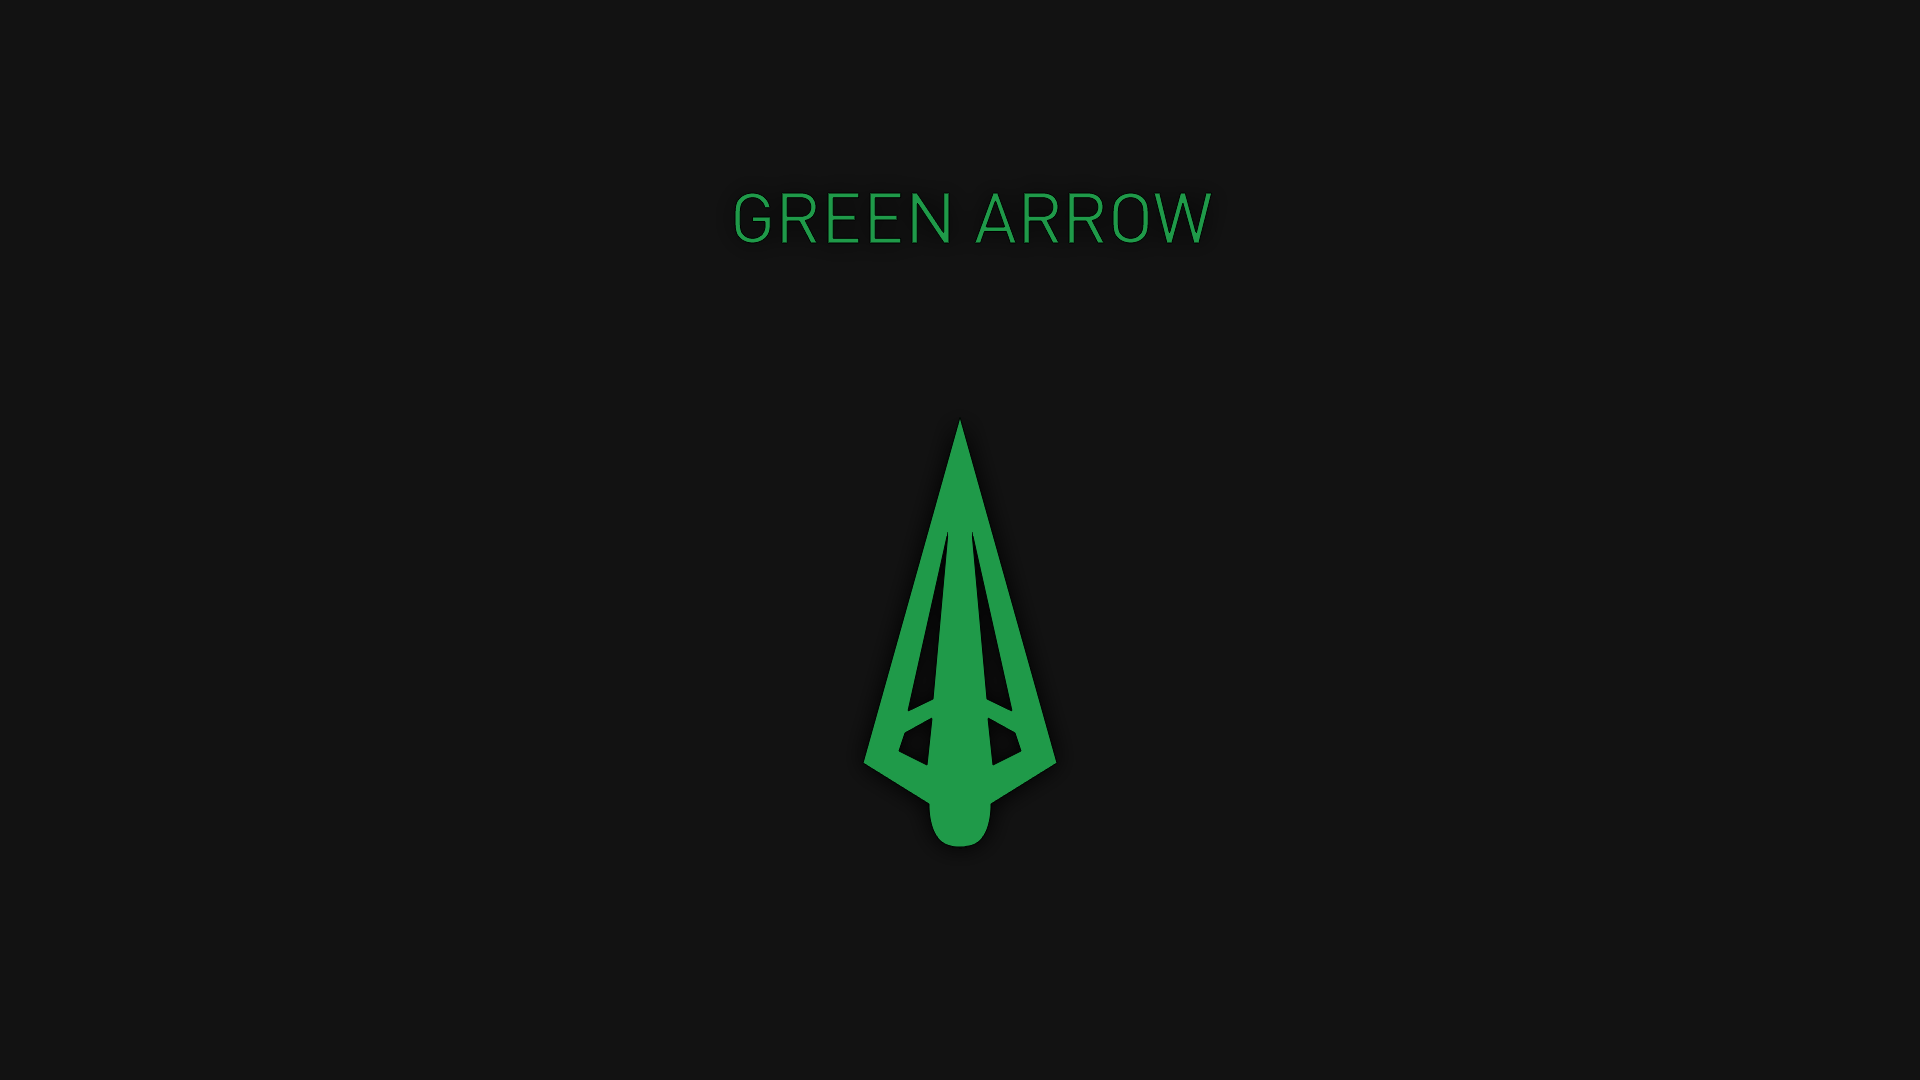 Wallpaper Green arrow minimal